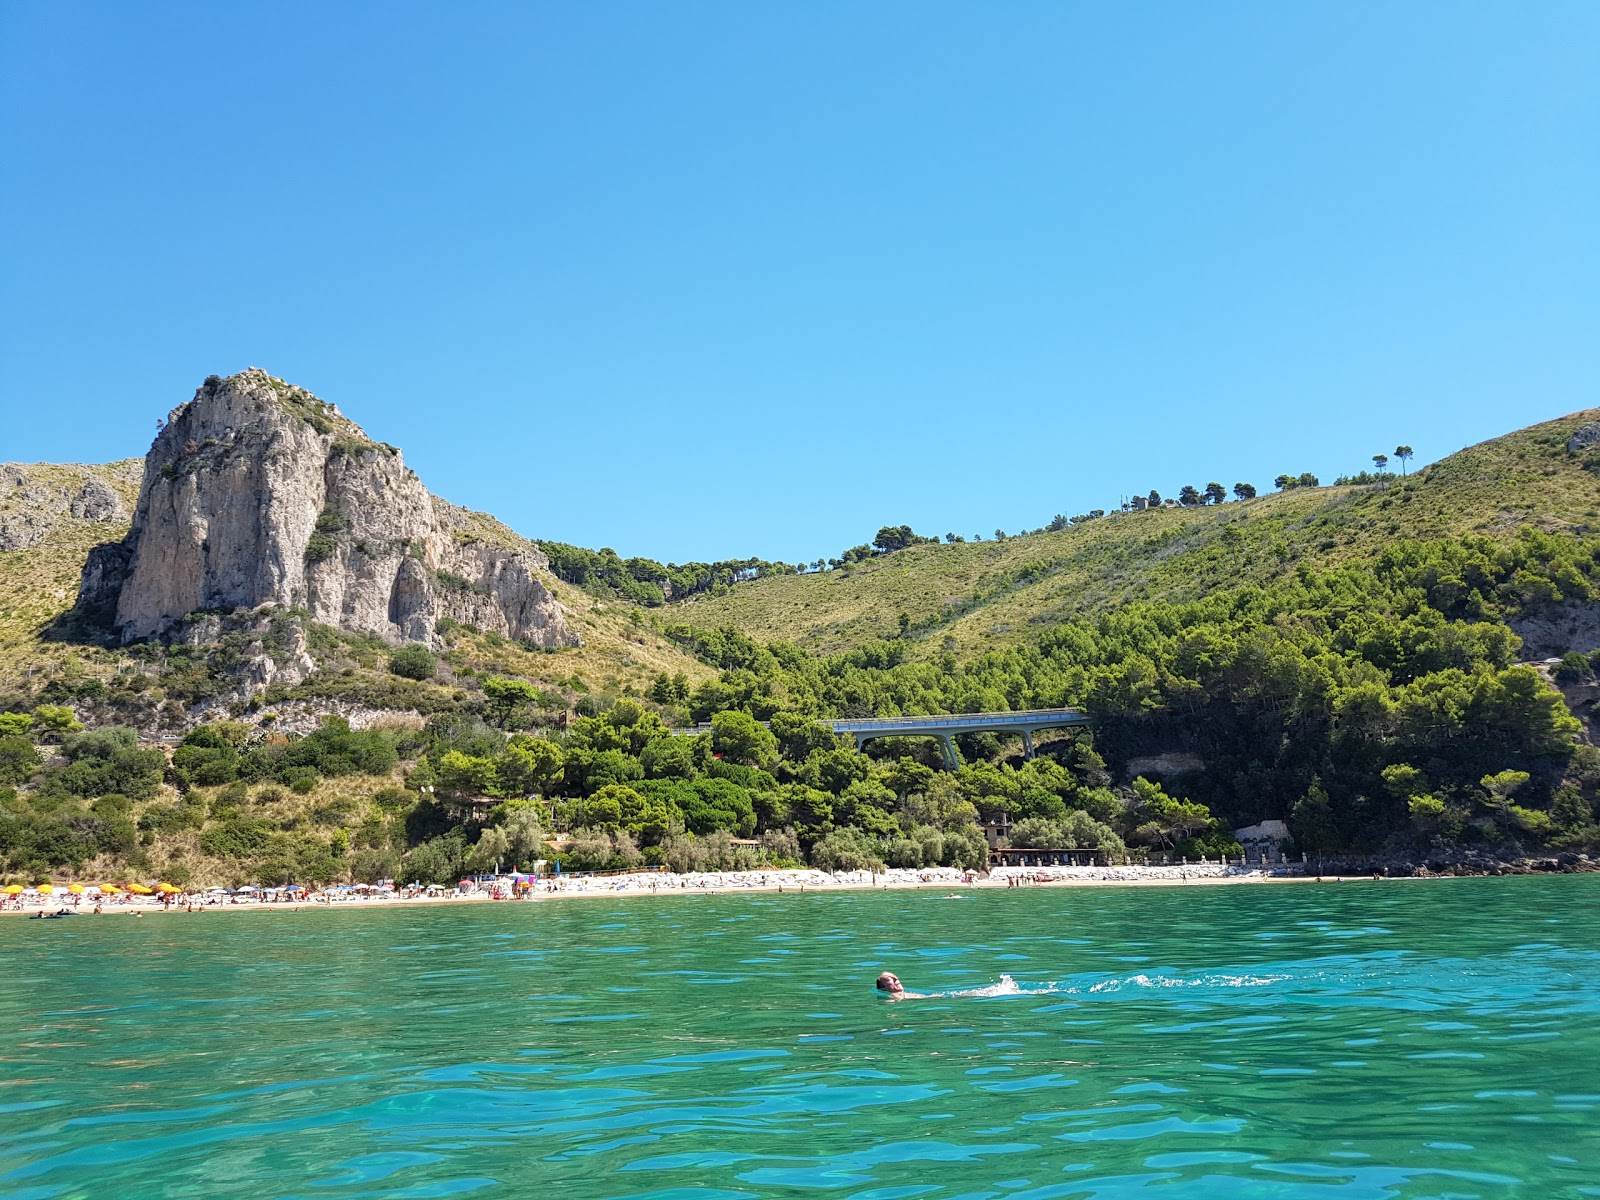 Foto de Spiaggia libera Sperlonga y su hermoso paisaje